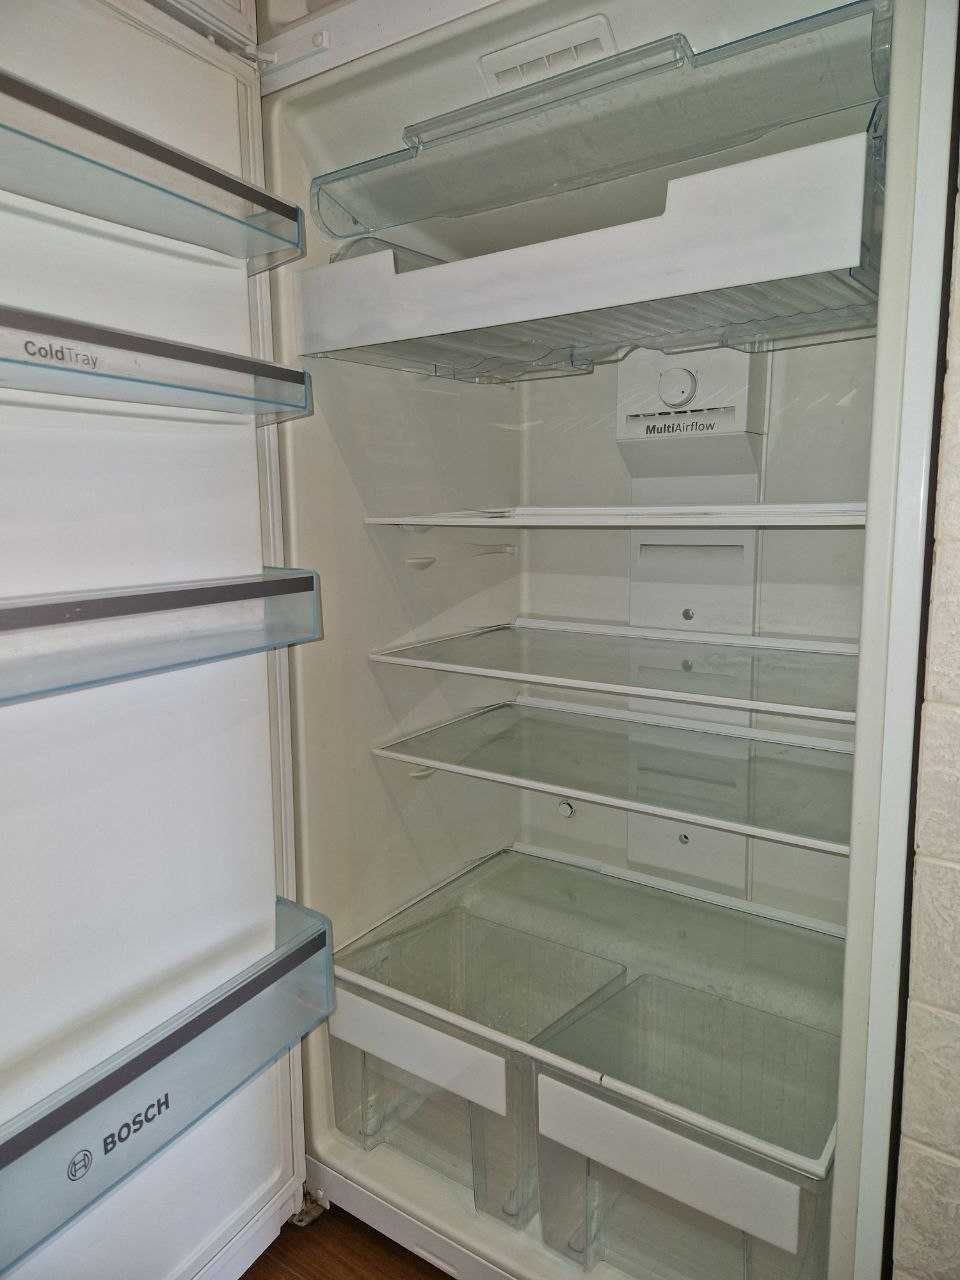 Двокамерний холодильник BOSCH 70 см.